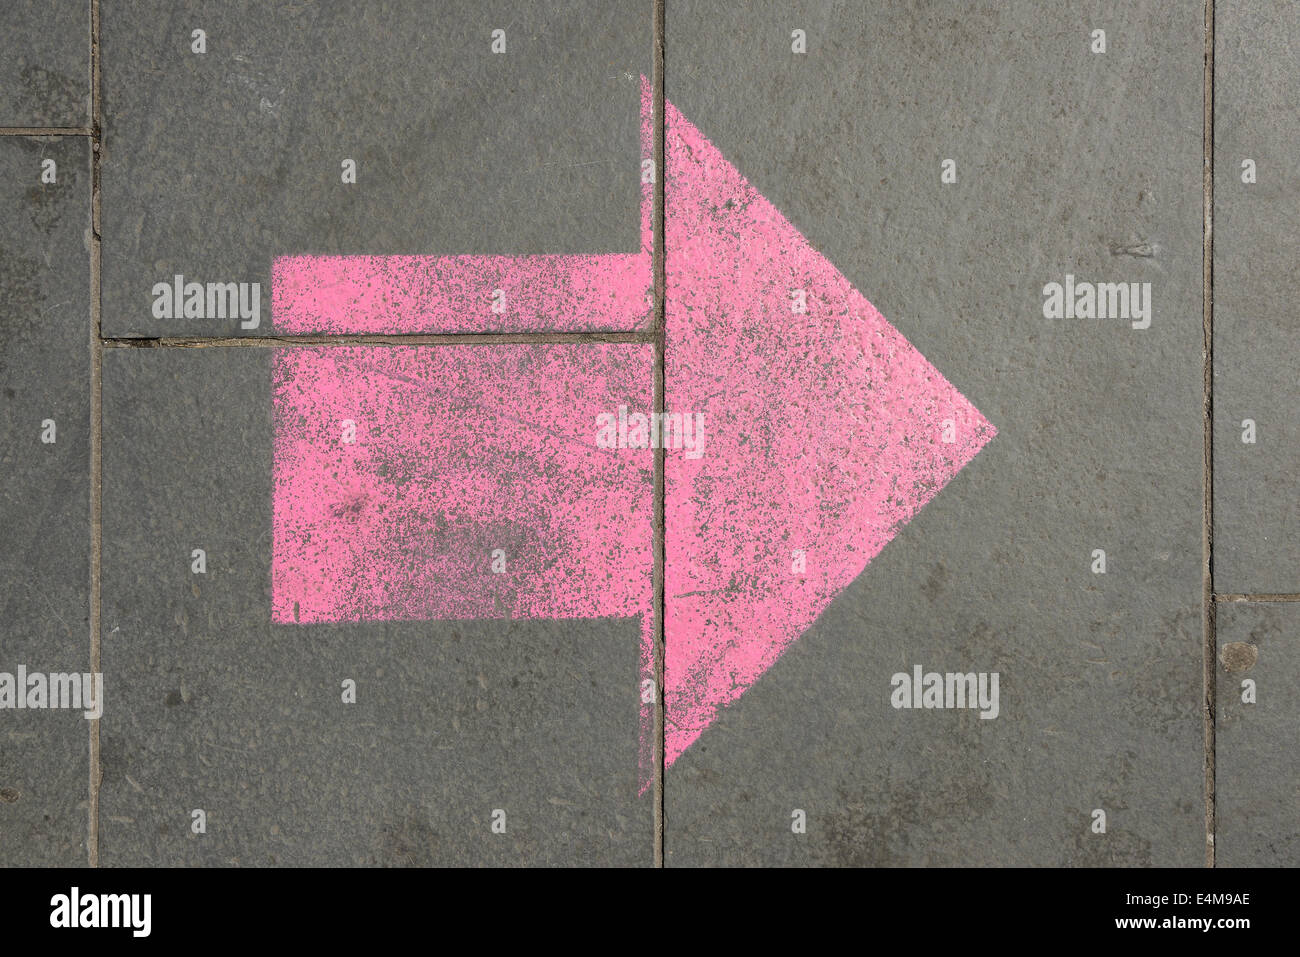 Forma de flecha pintada en el pavimento Foto de stock